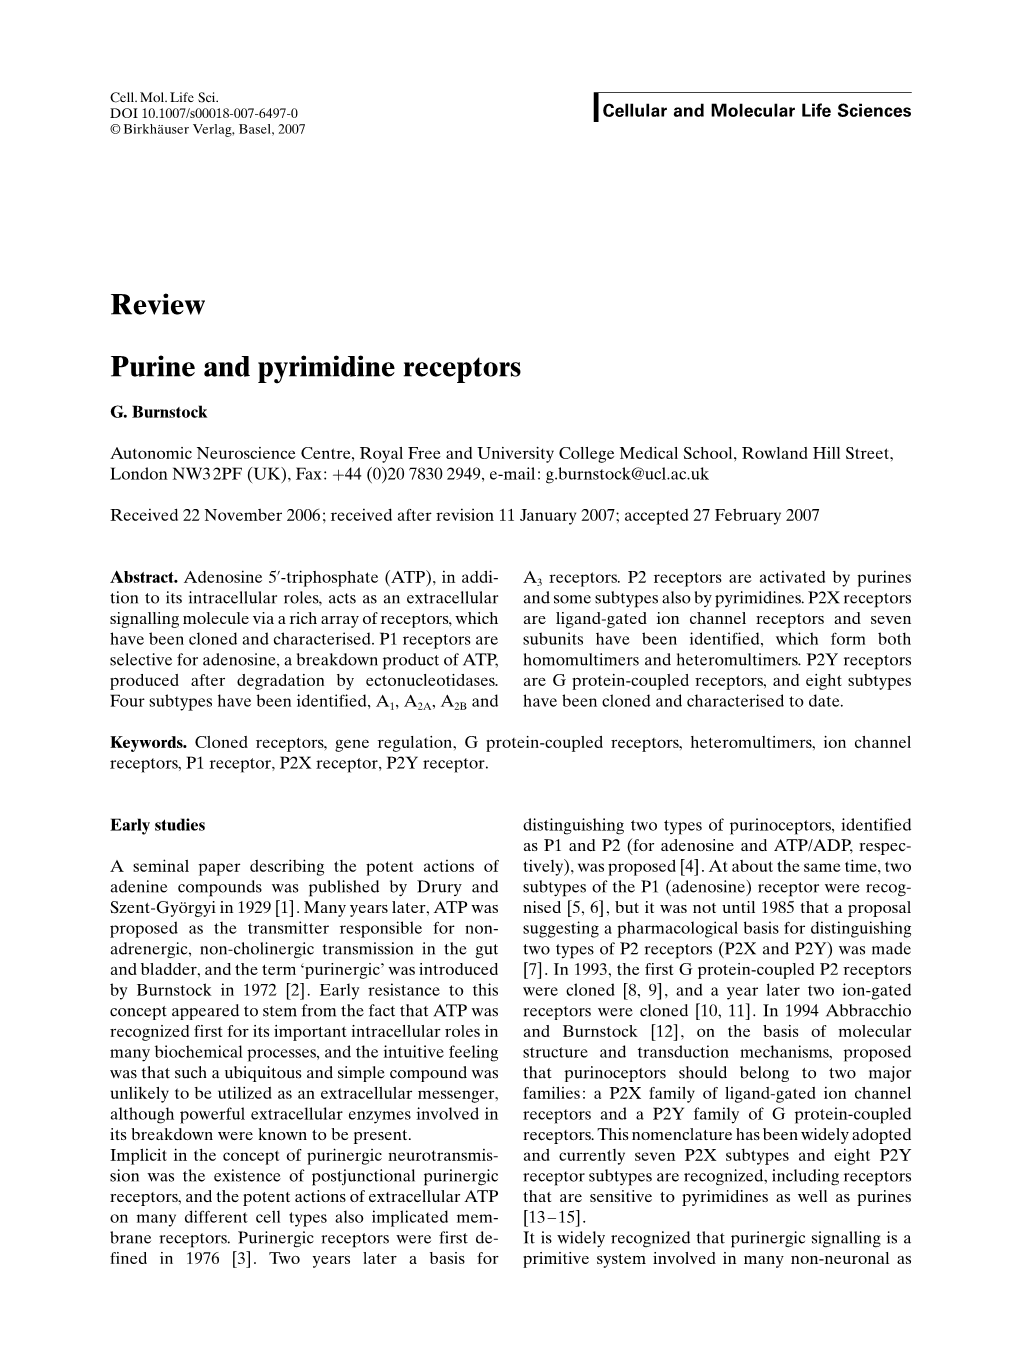 Review Purine and Pyrimidine Receptors